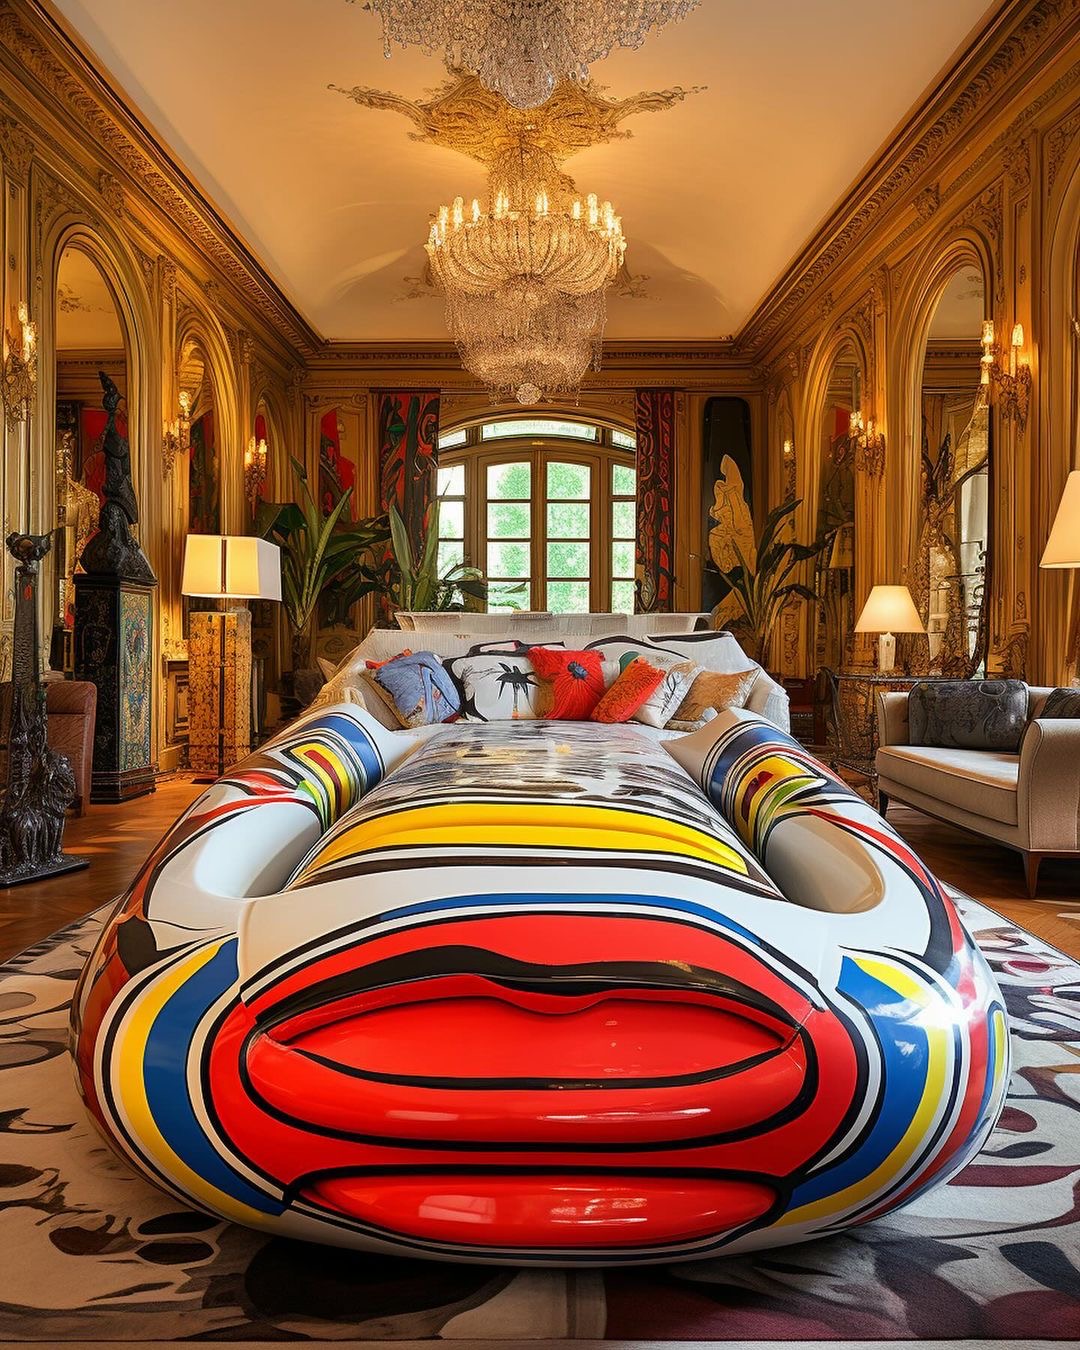 Eclectic Art in Your Modern Dream Home Guest Bedroom